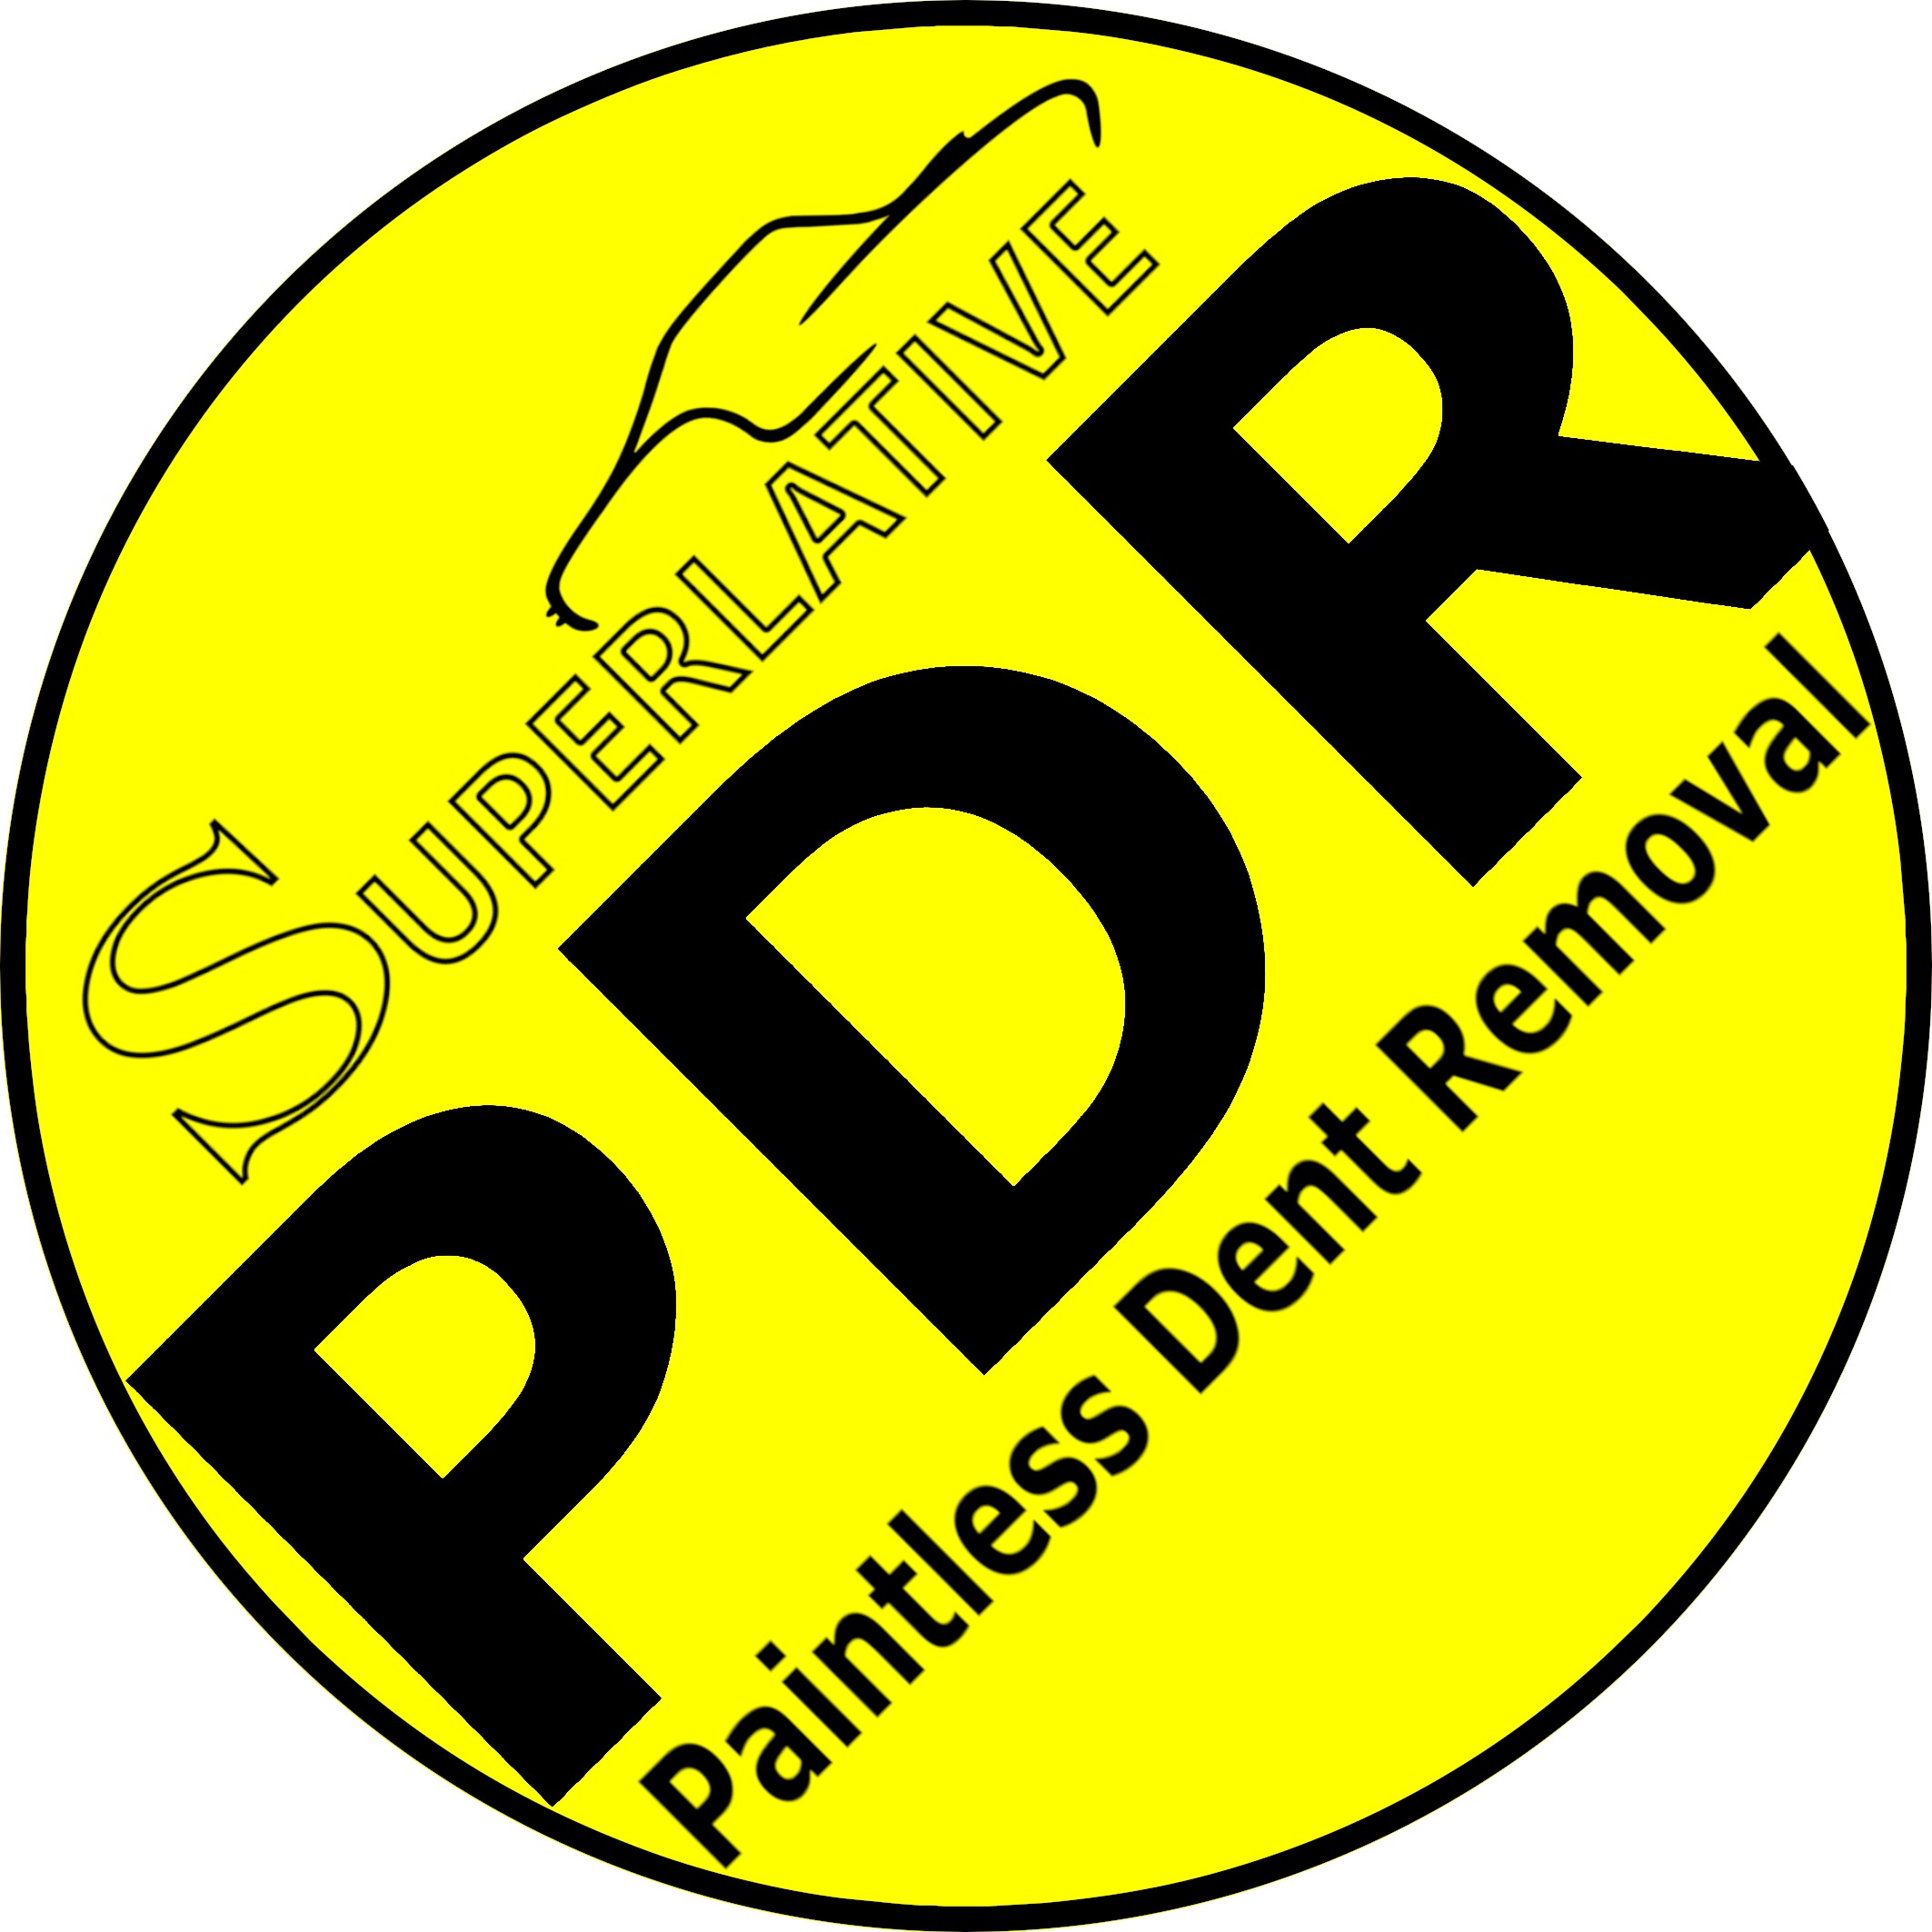 Paintless Dent Removal | car repair | Church Ave, Armadale WA 6112, Australia | 0419190752 OR +61 419 190 752